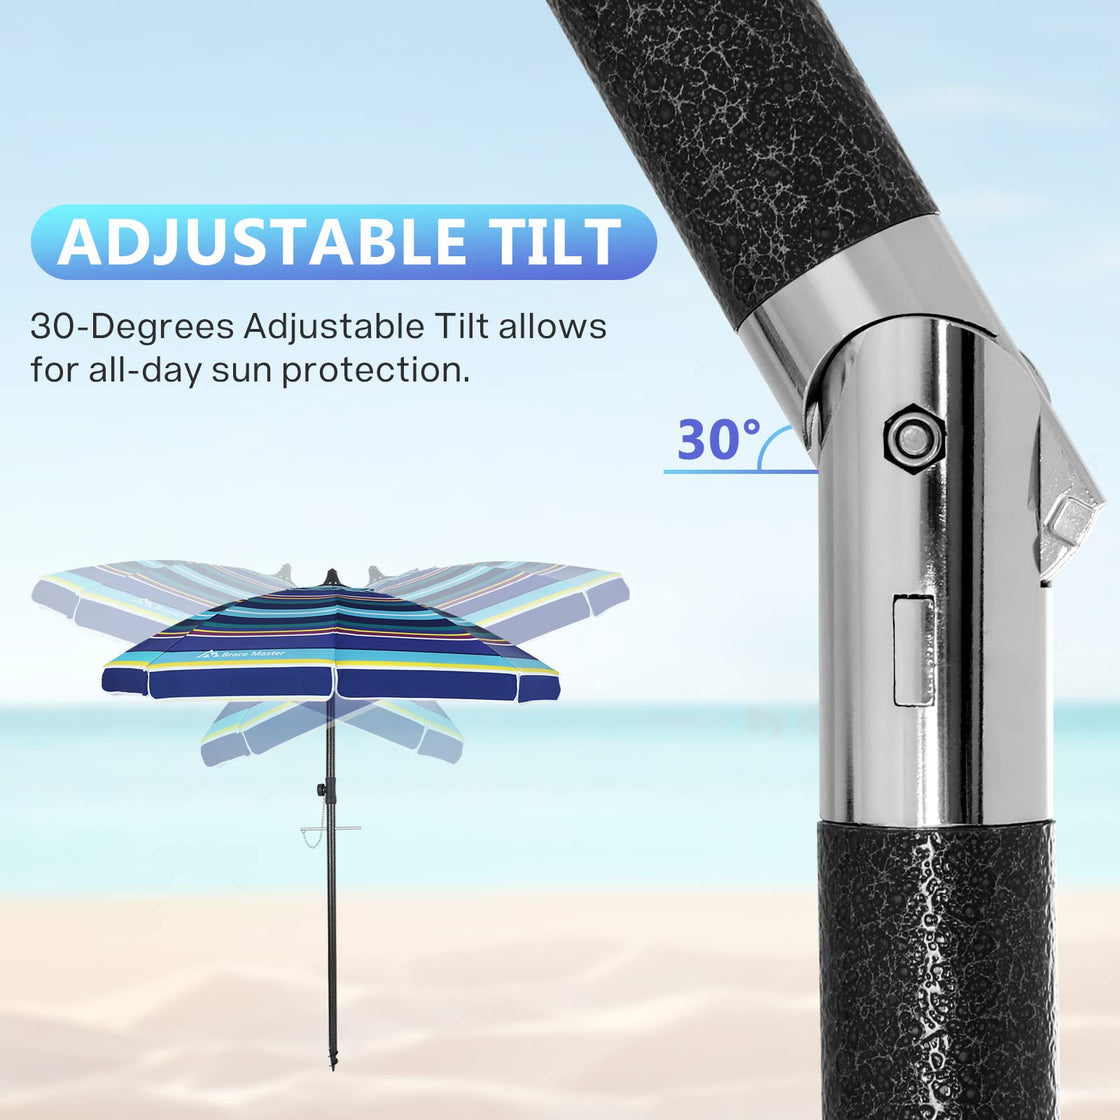 7.5ft Beach Umbrella (BlueYellow Stripe,7.5ft)